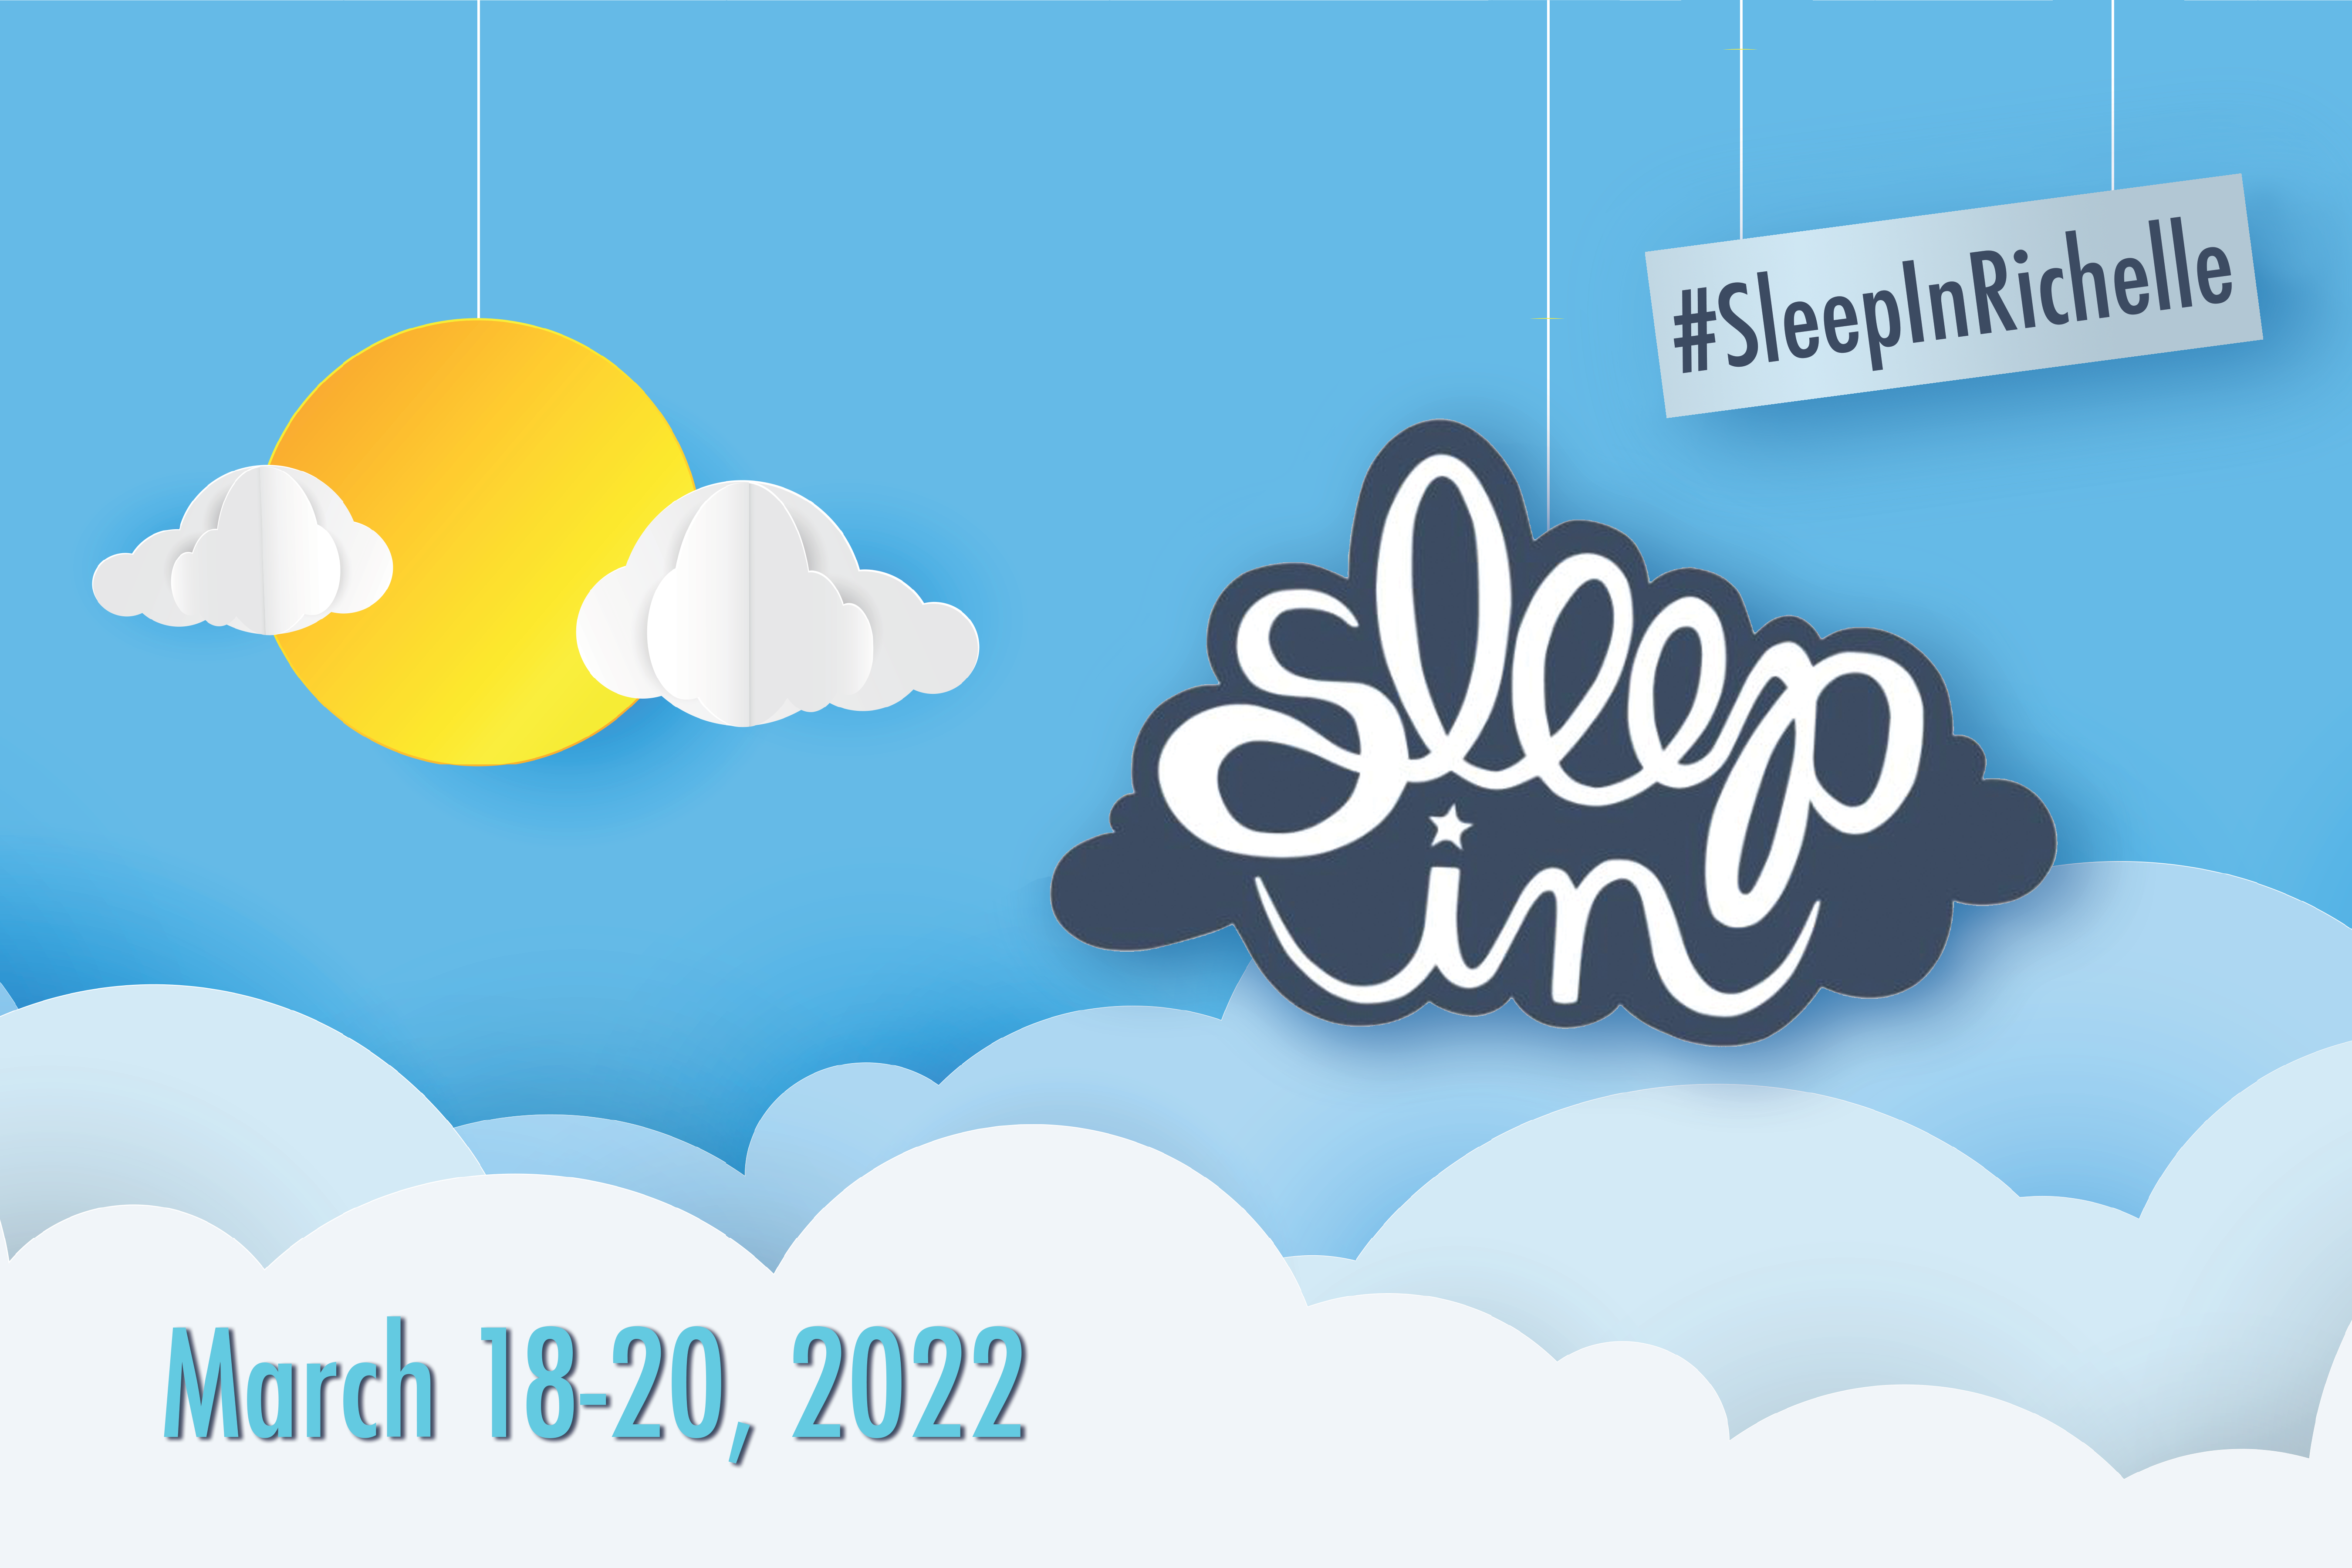 Sleep In fundraiser 2022 Announcement!